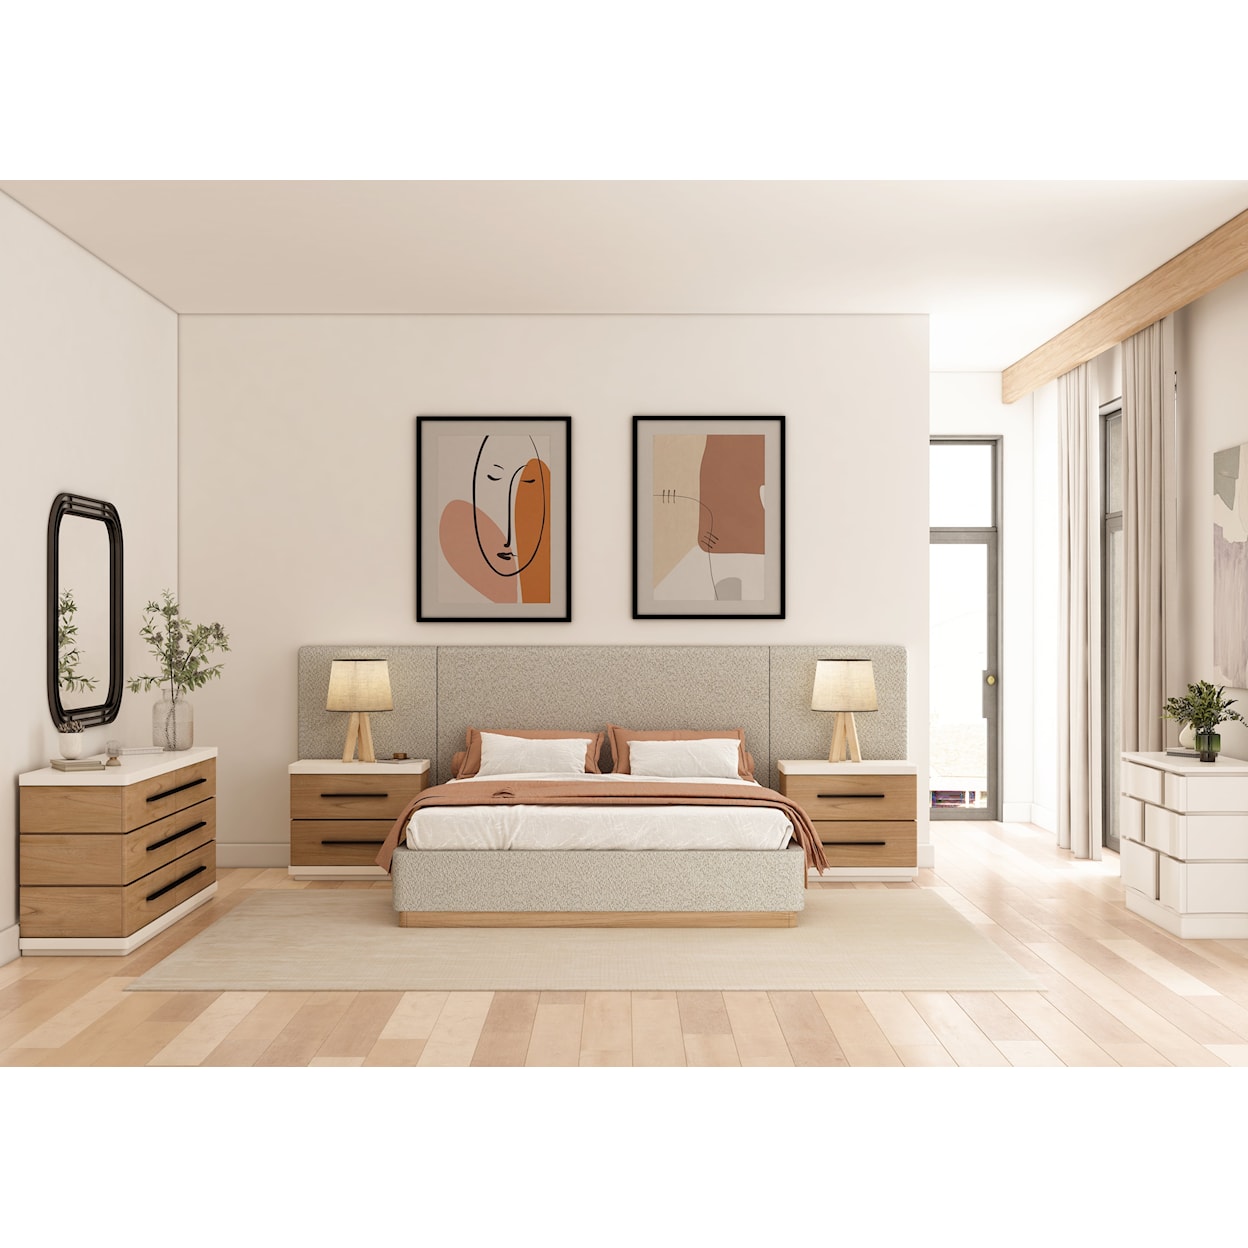 A.R.T. Furniture Inc Portico King Bedroom Set